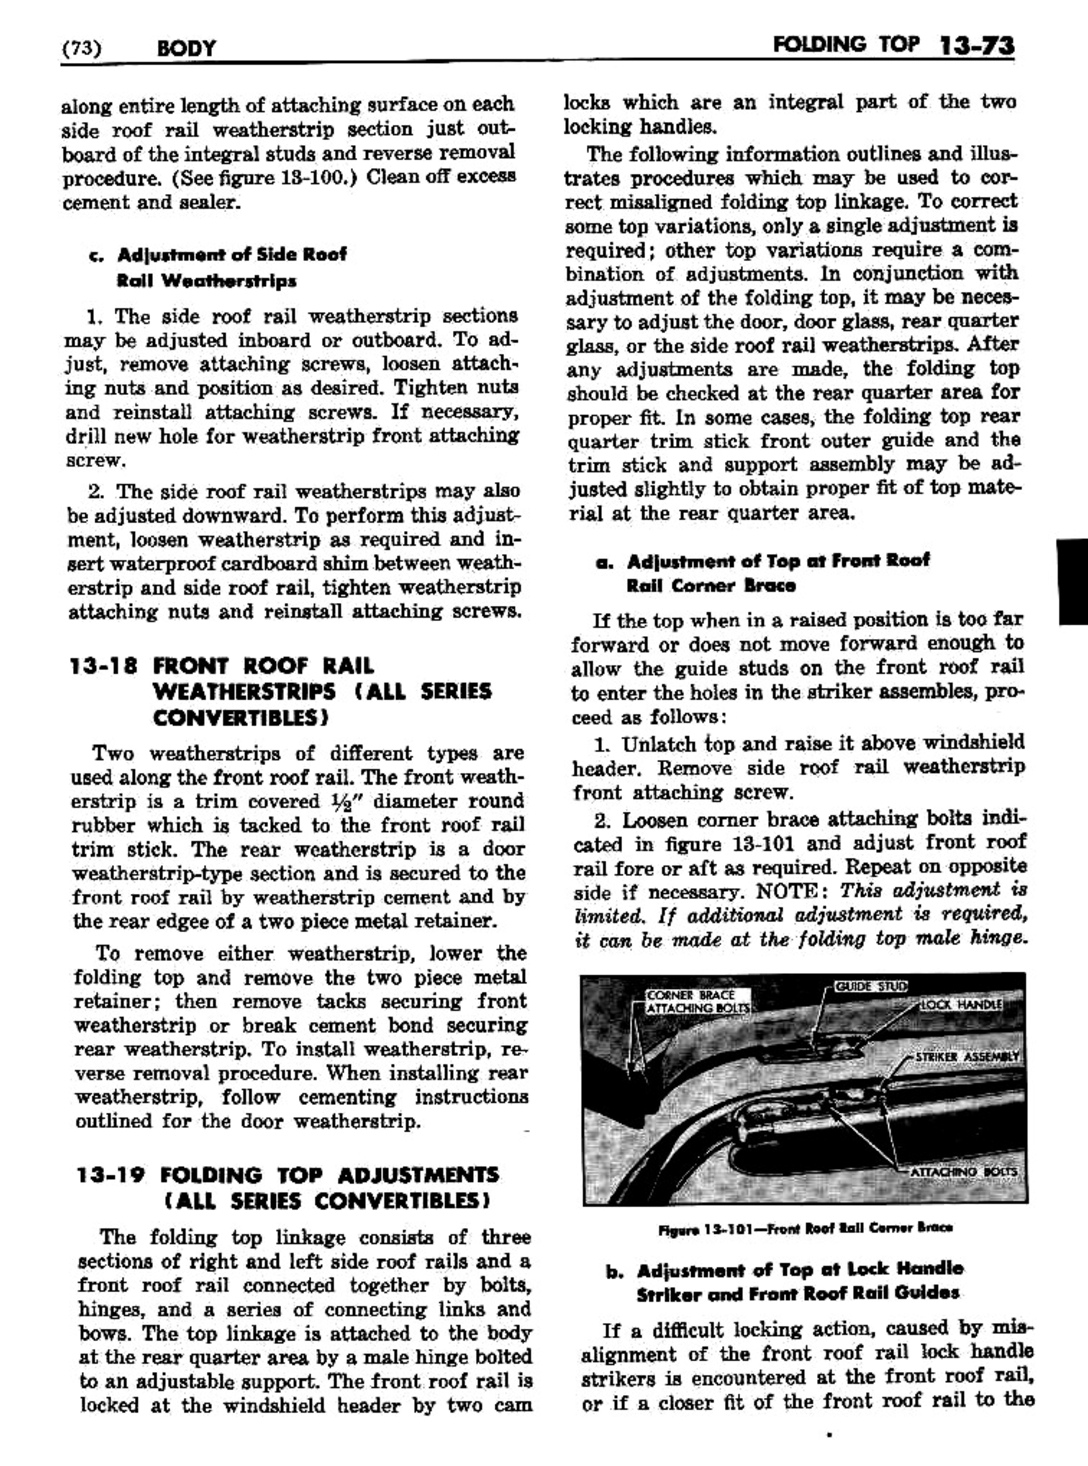 n_1957 Buick Body Service Manual-075-075.jpg